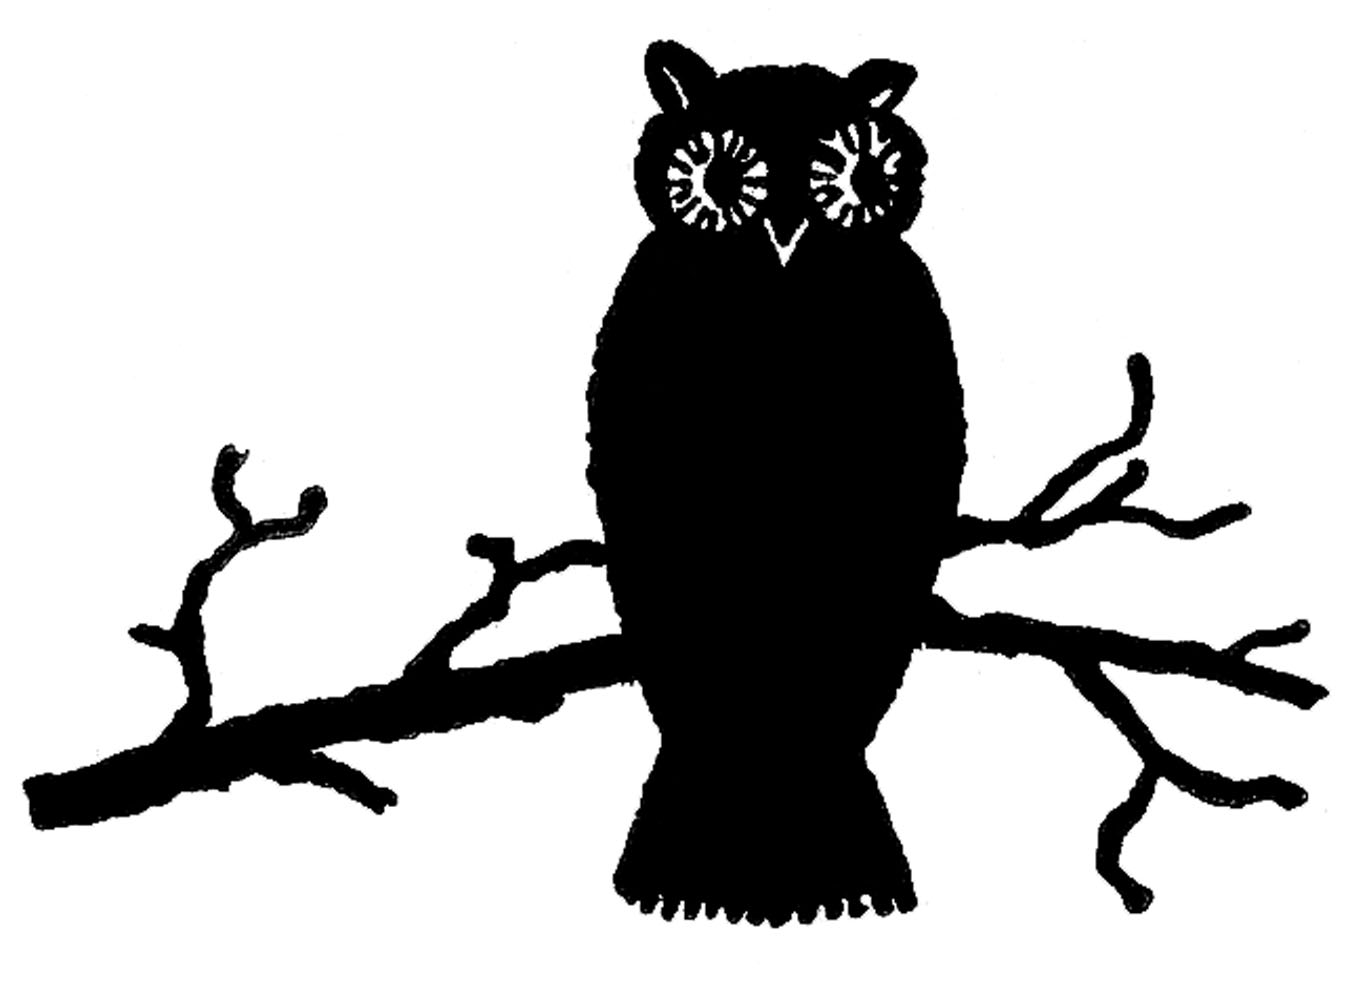 Vintage Halloween Clip Art - Cute Owl Silhouette - The Graphics Fairy